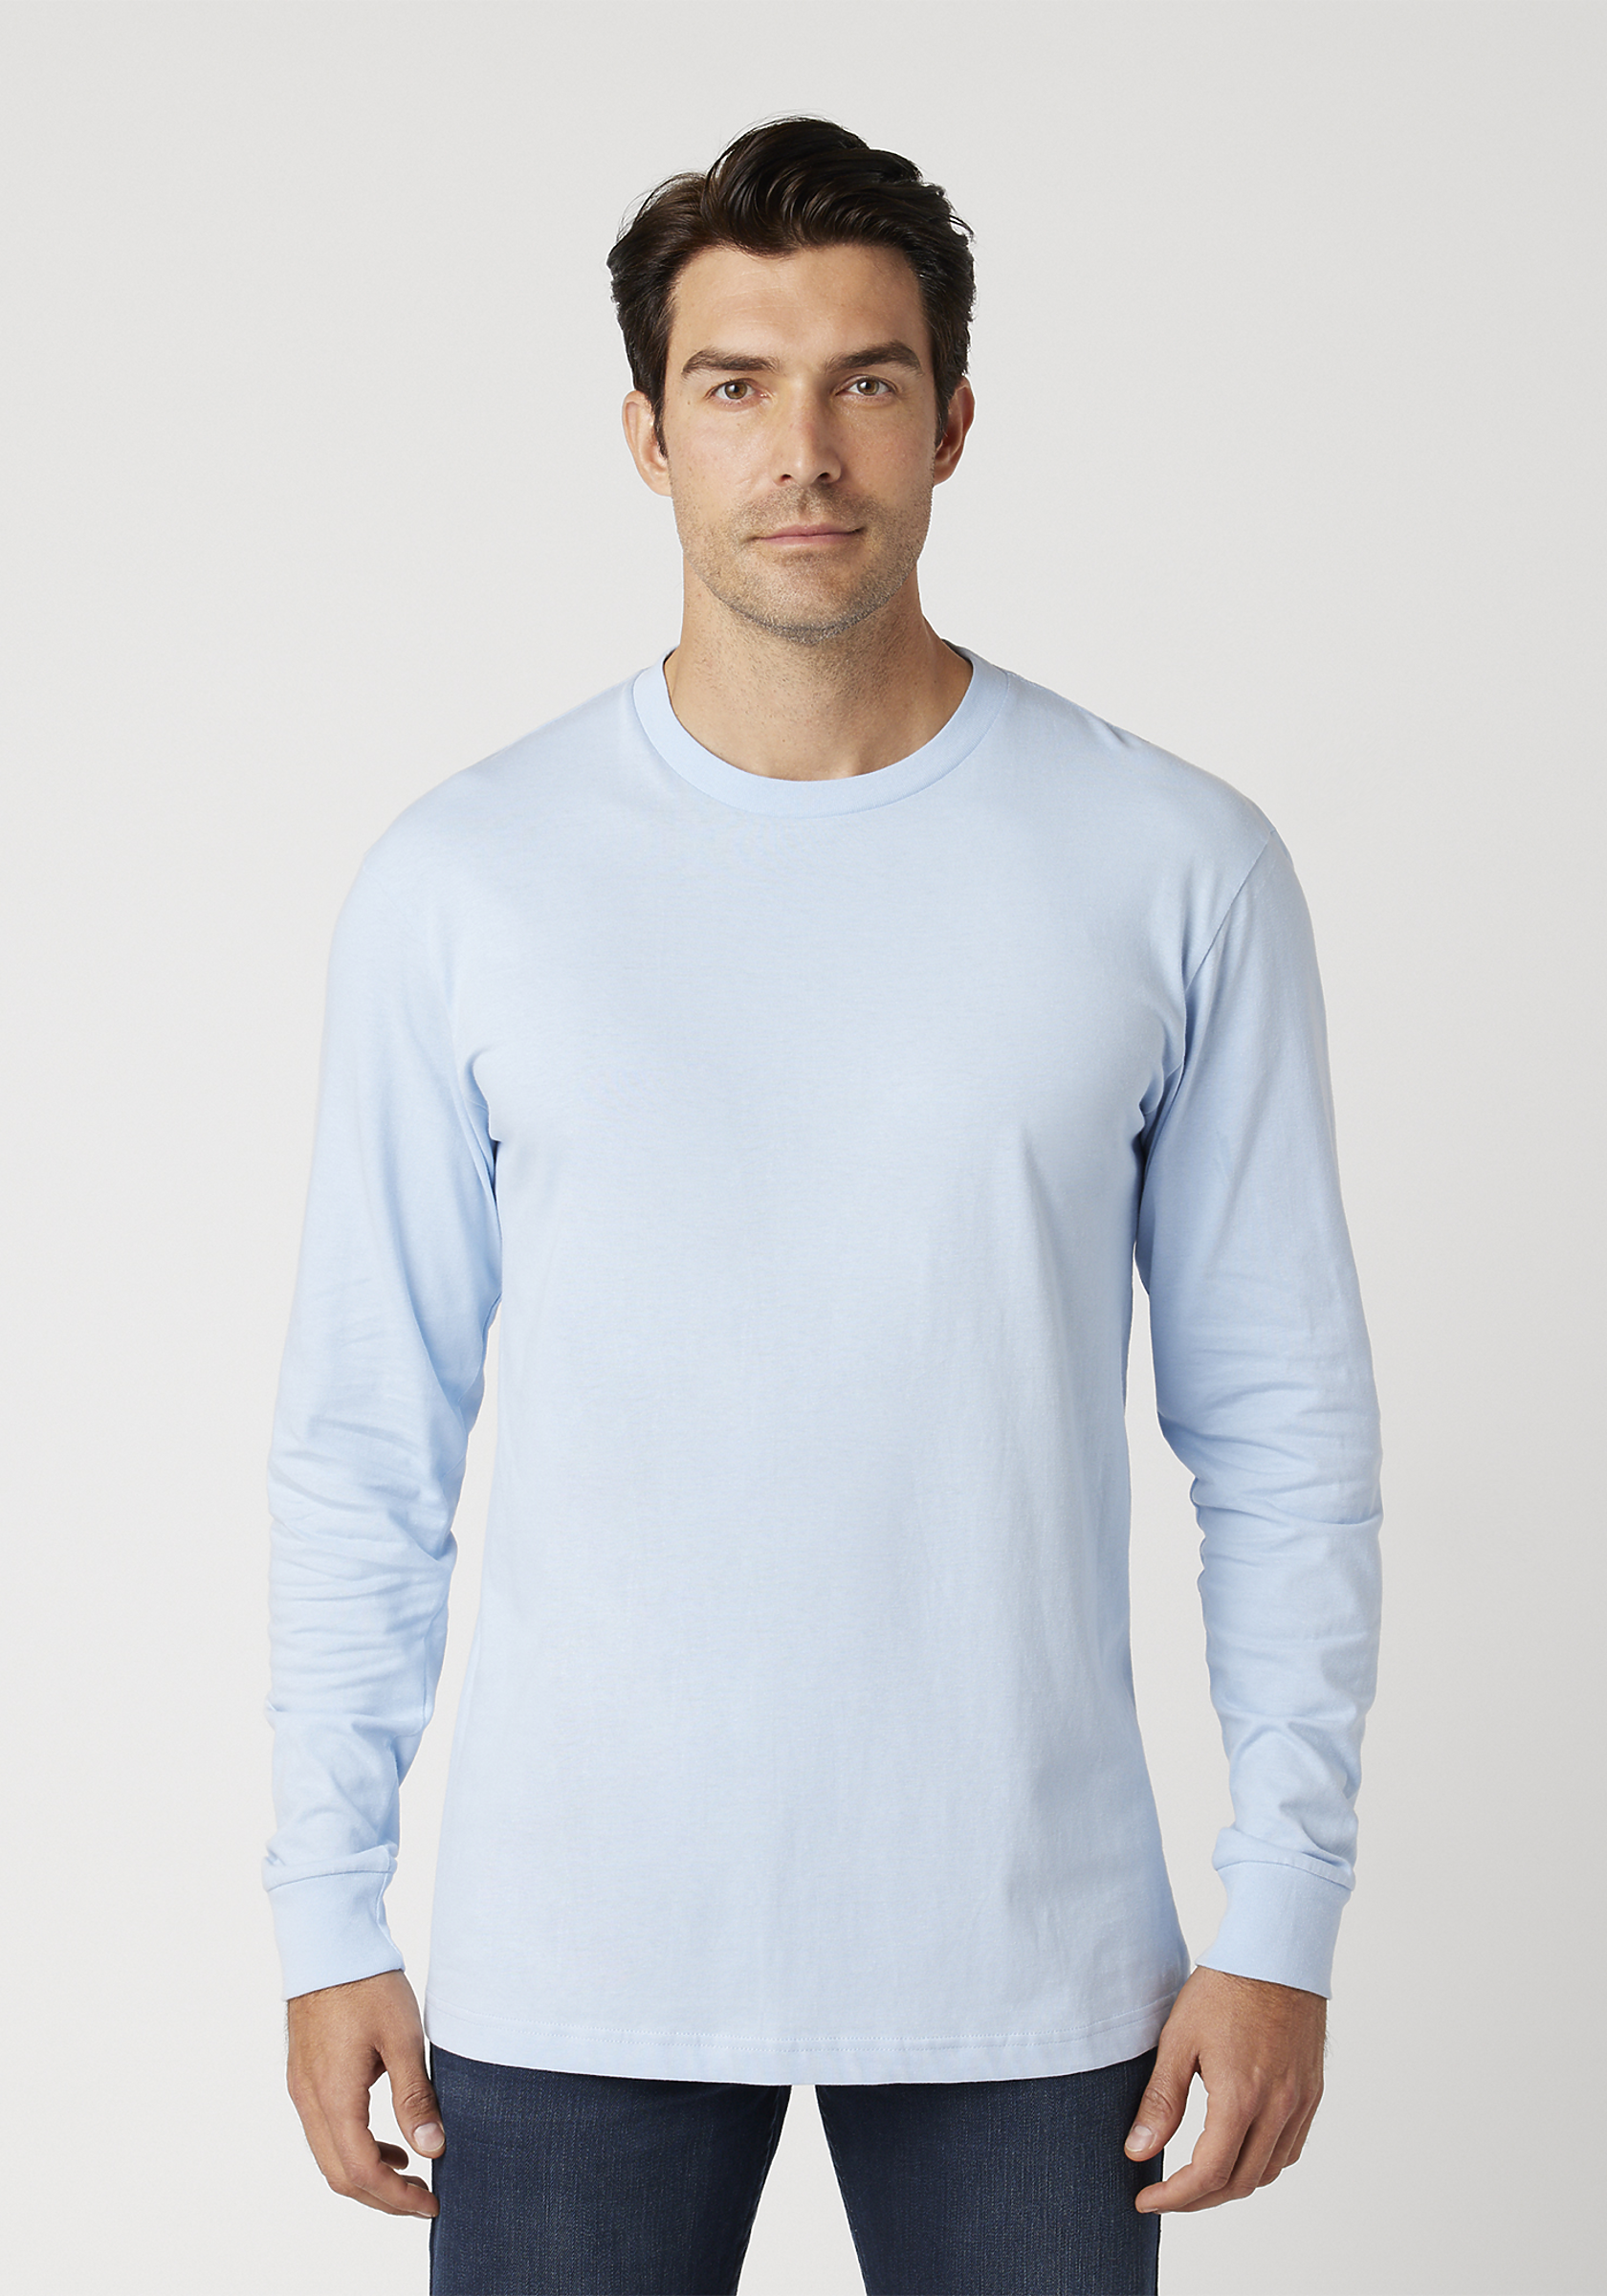 Heavy Duty Long Sleeve T-Shirts, Premium Cotton Shirts